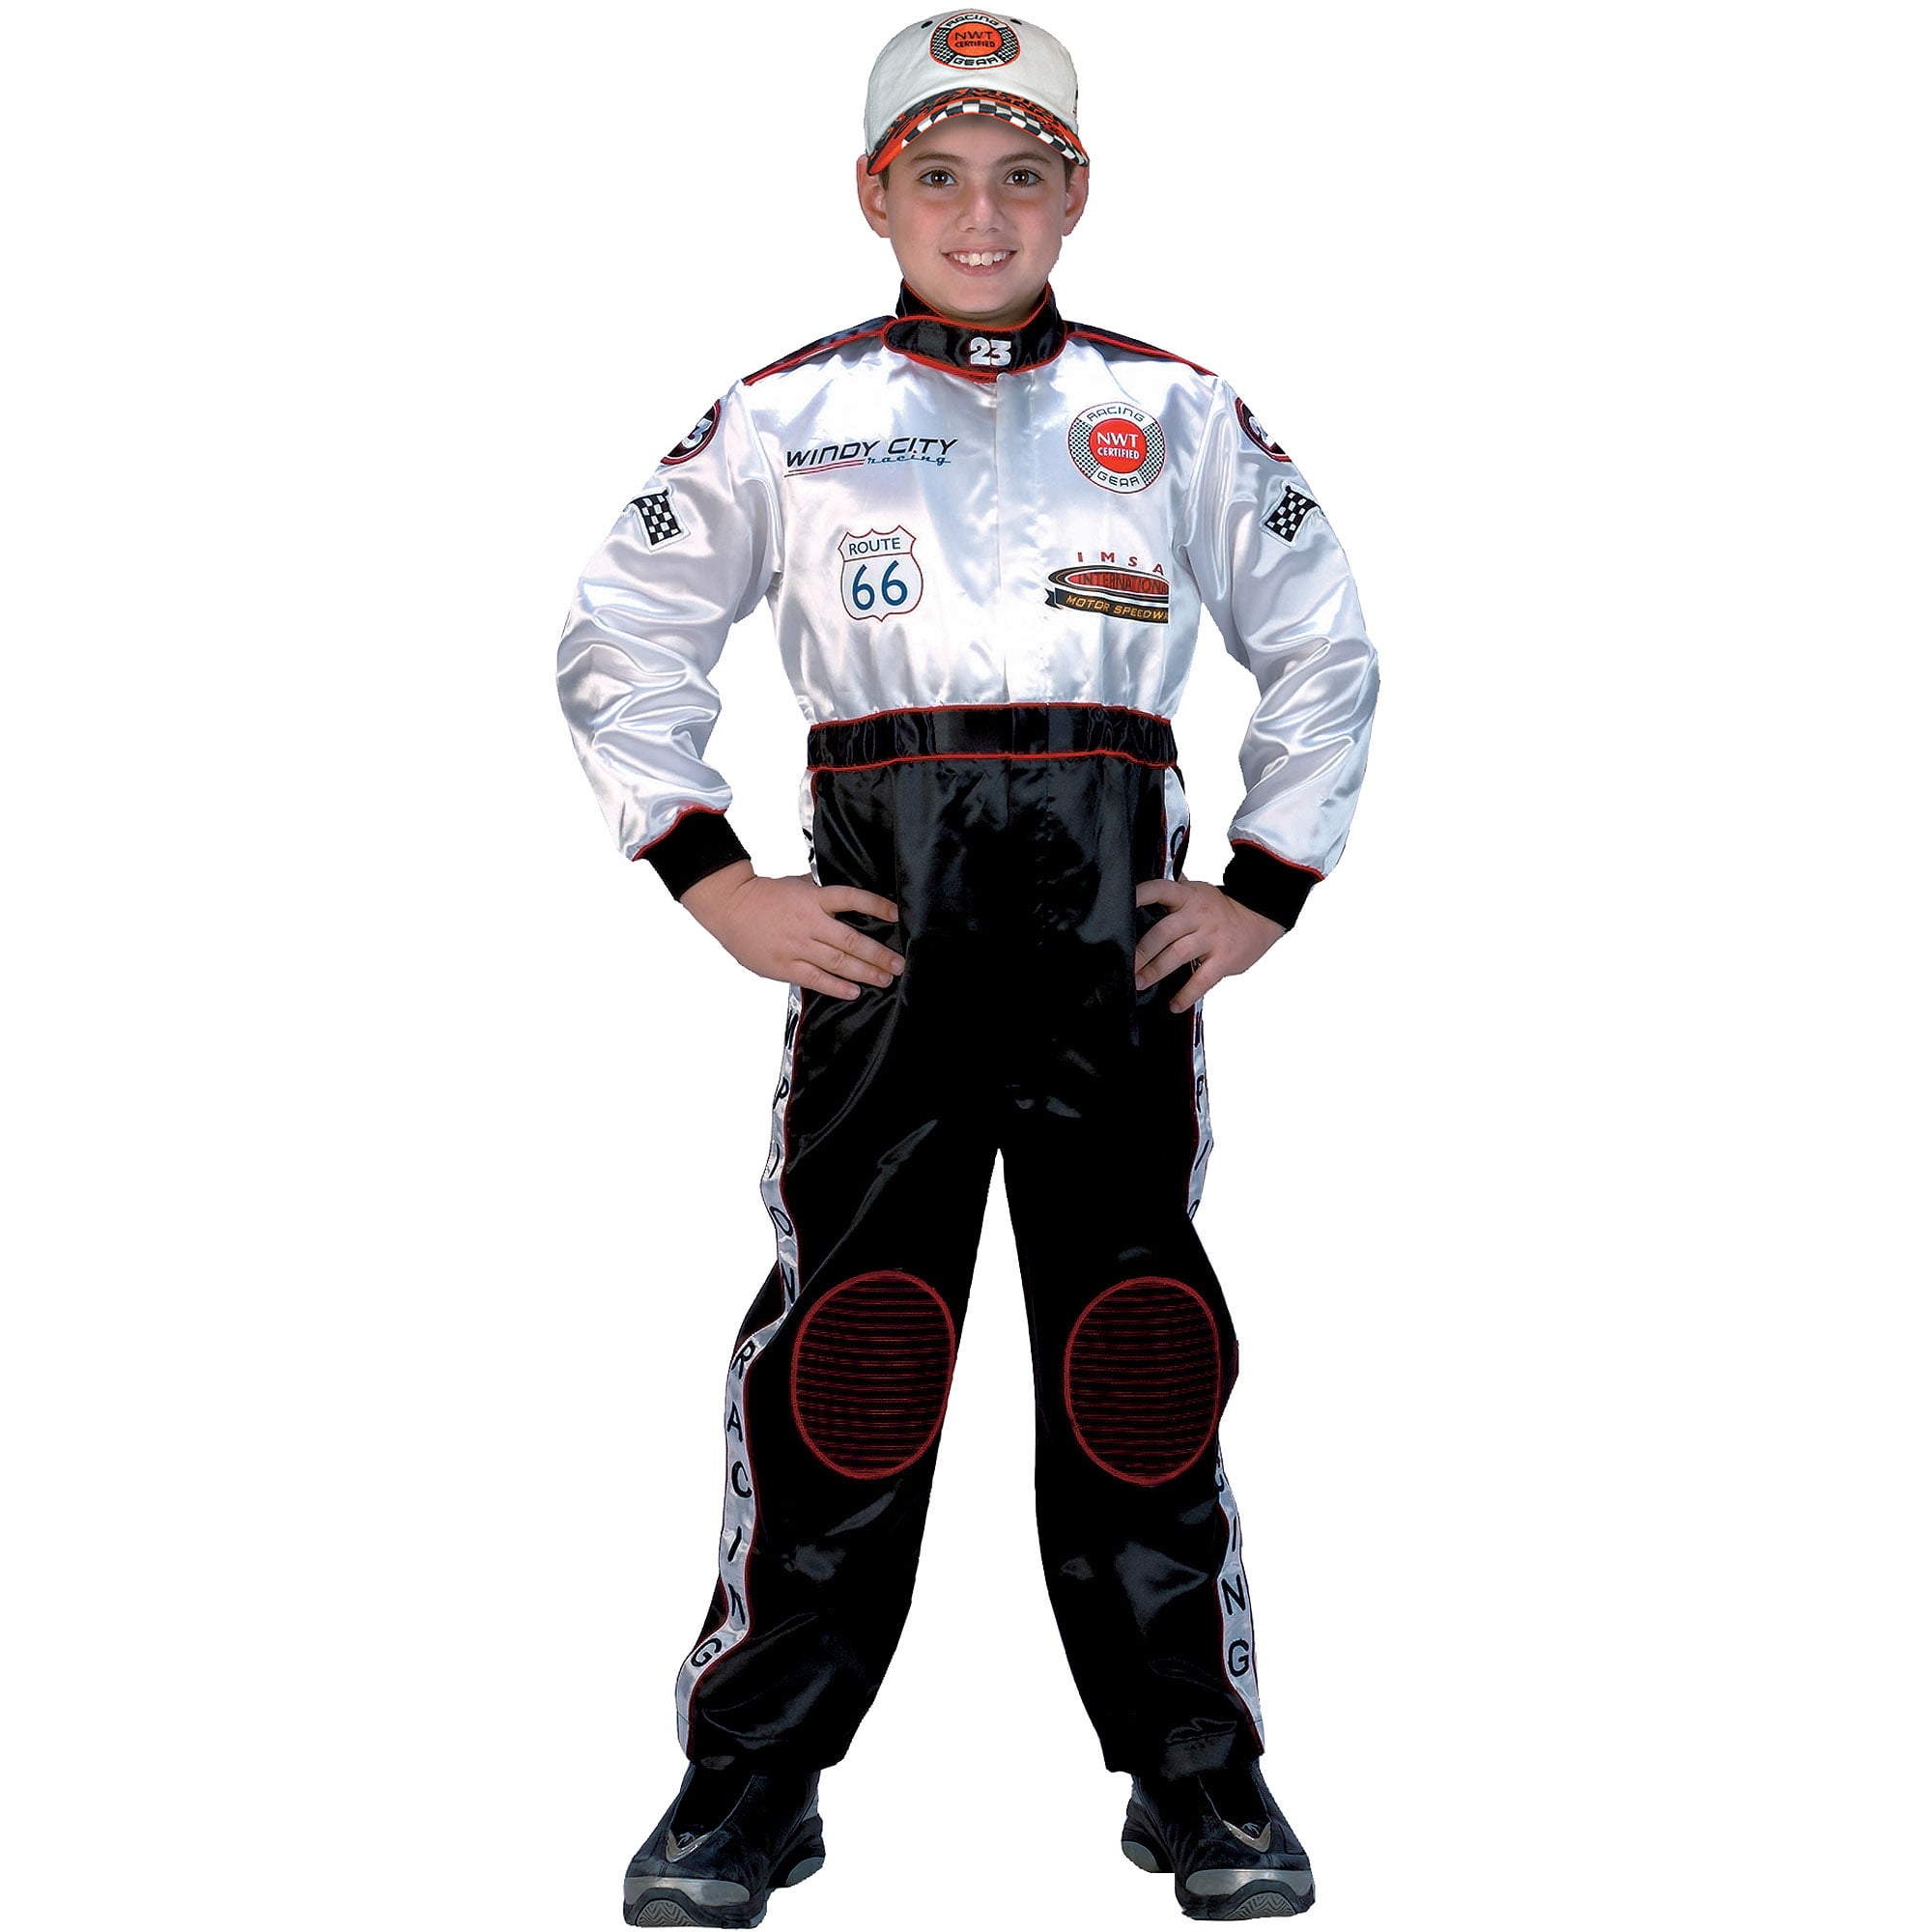 Racing suit - Wikipedia